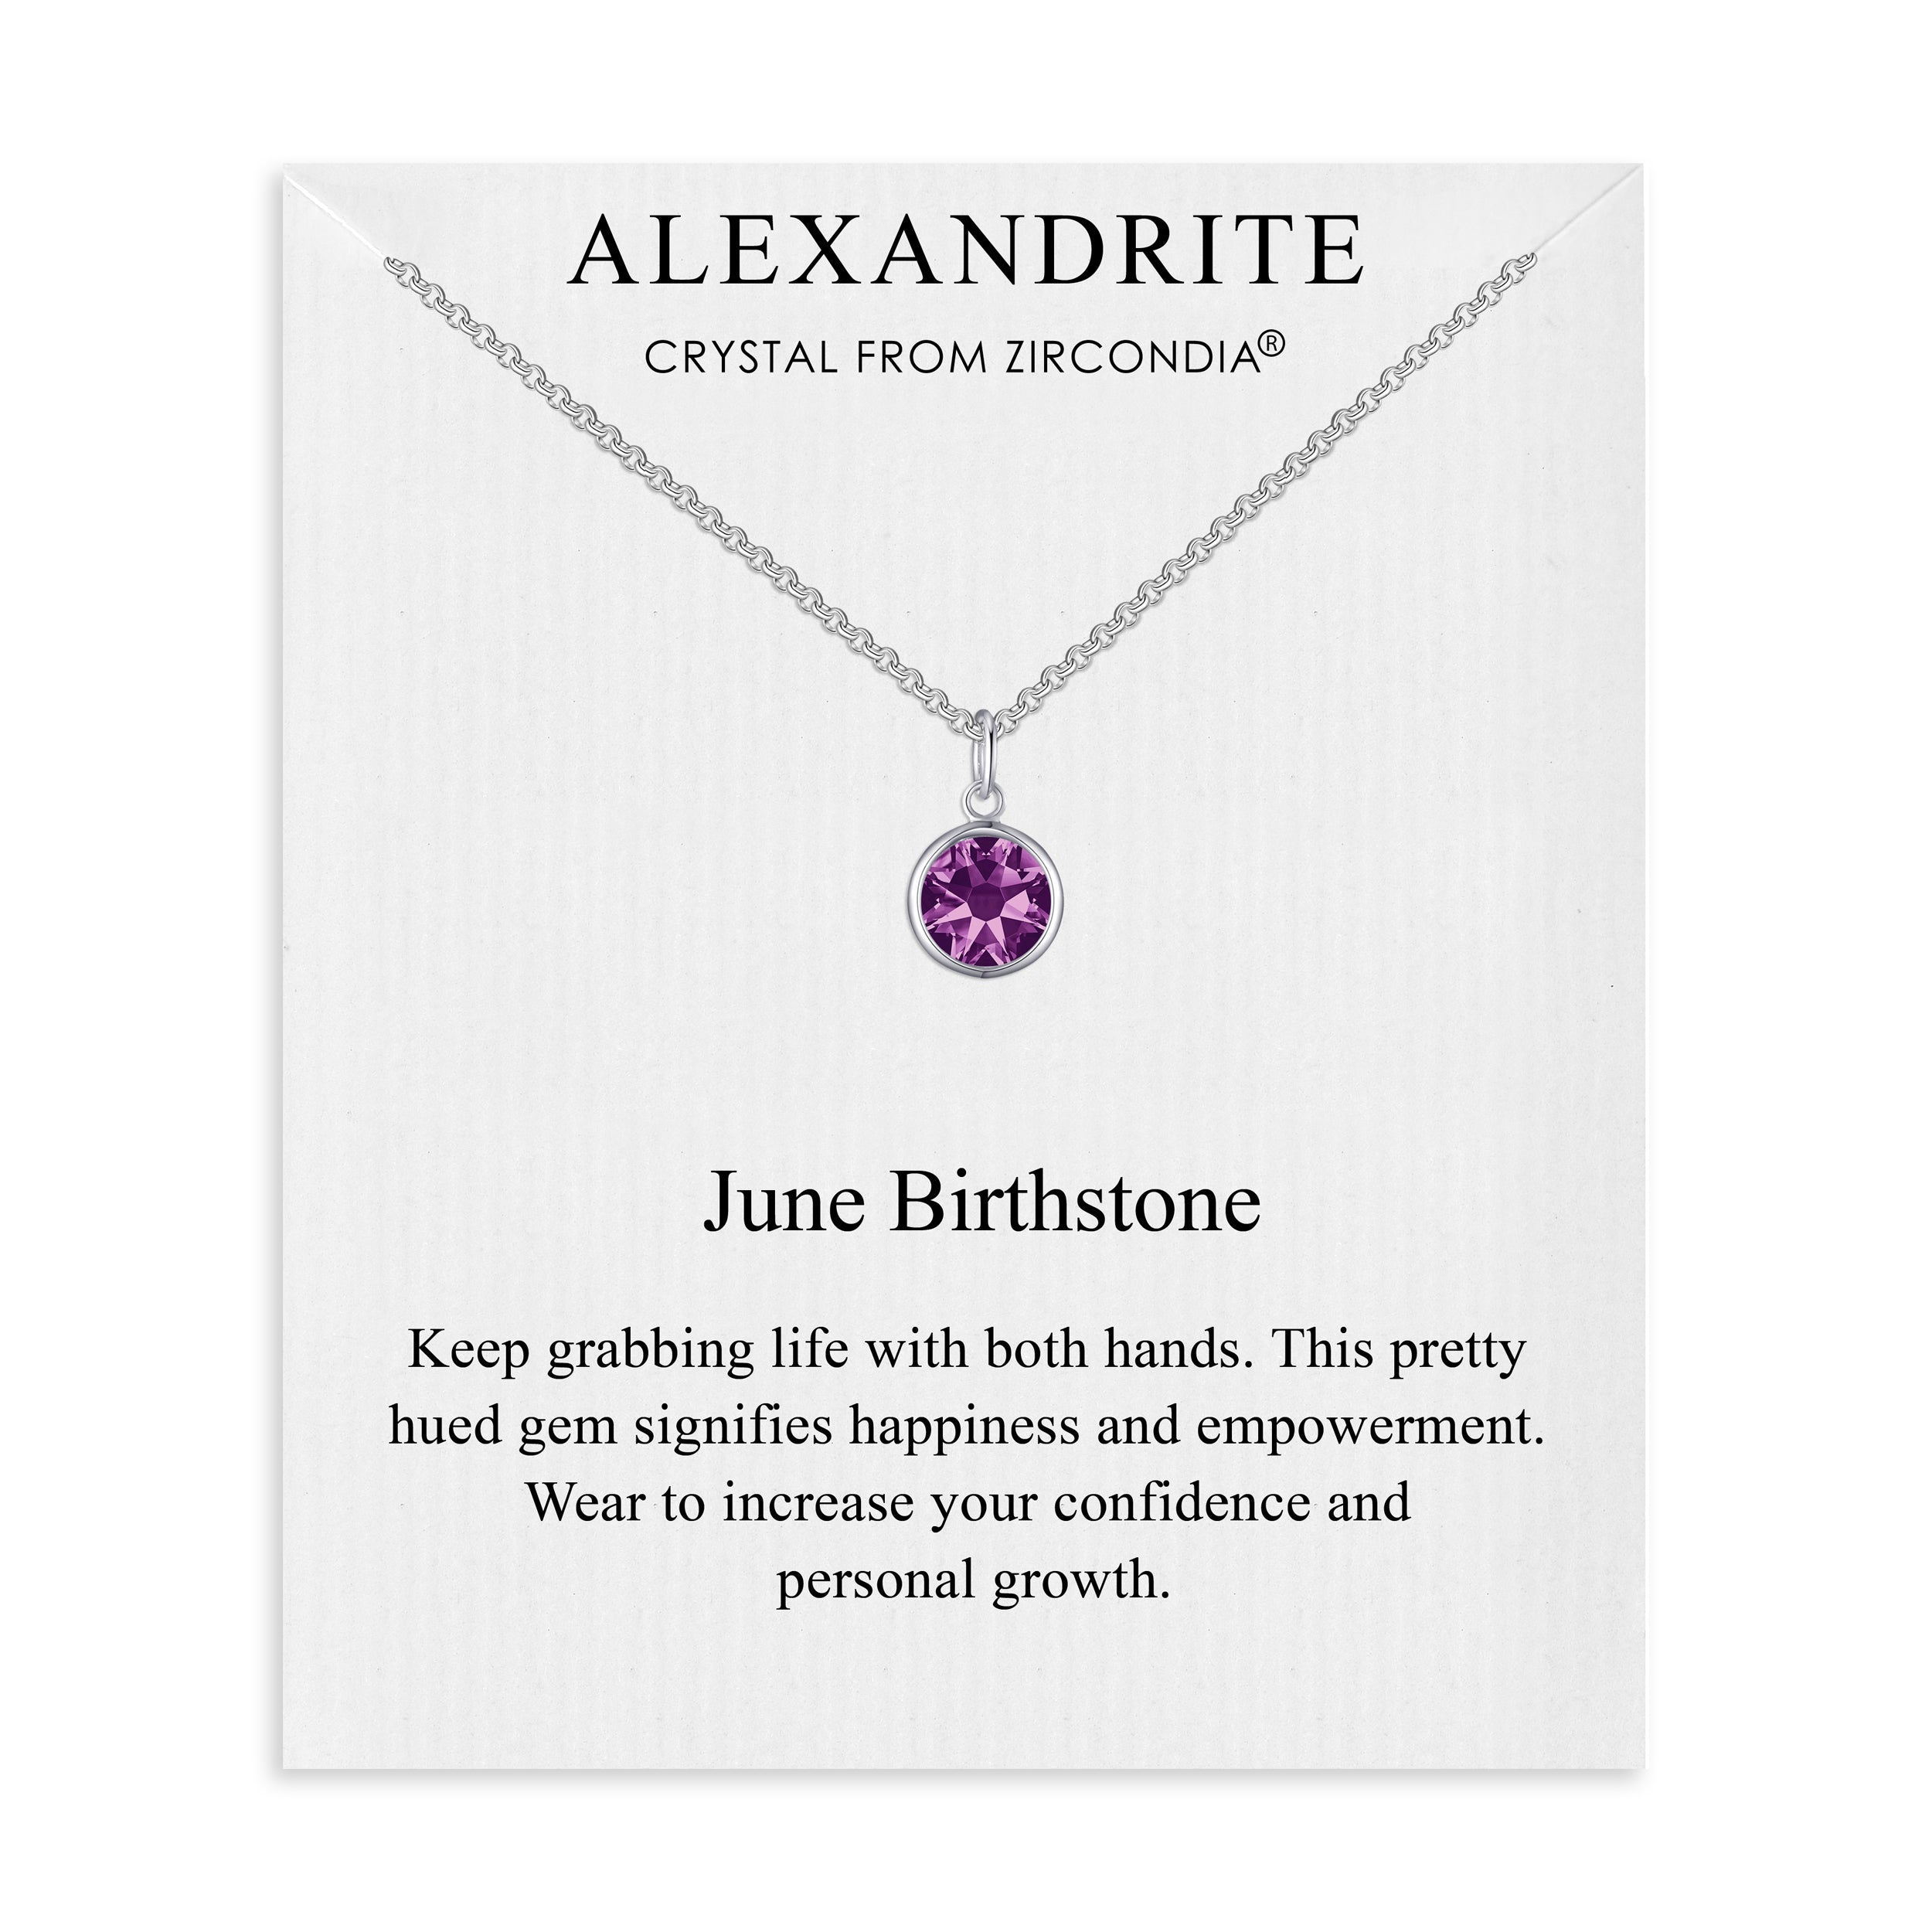 June (Alexandrite) Birthstone Necklace Created with Zircondia® Crystals by Philip Jones Jewellery